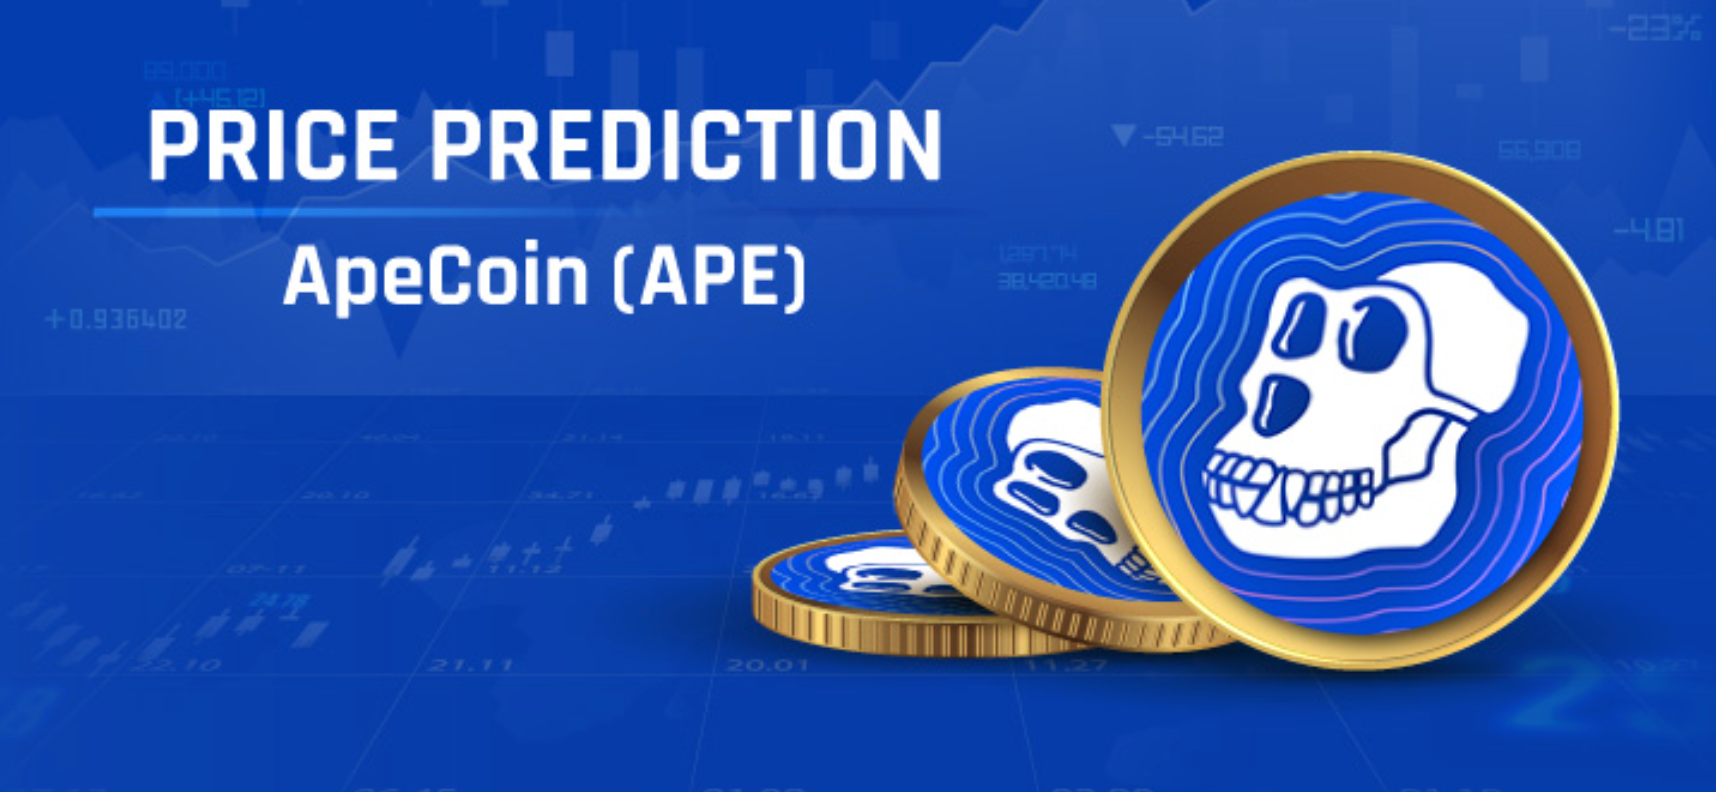 Apecoin (APE) Price Pumps 30% -Key Indicators Say More Gains Ahead